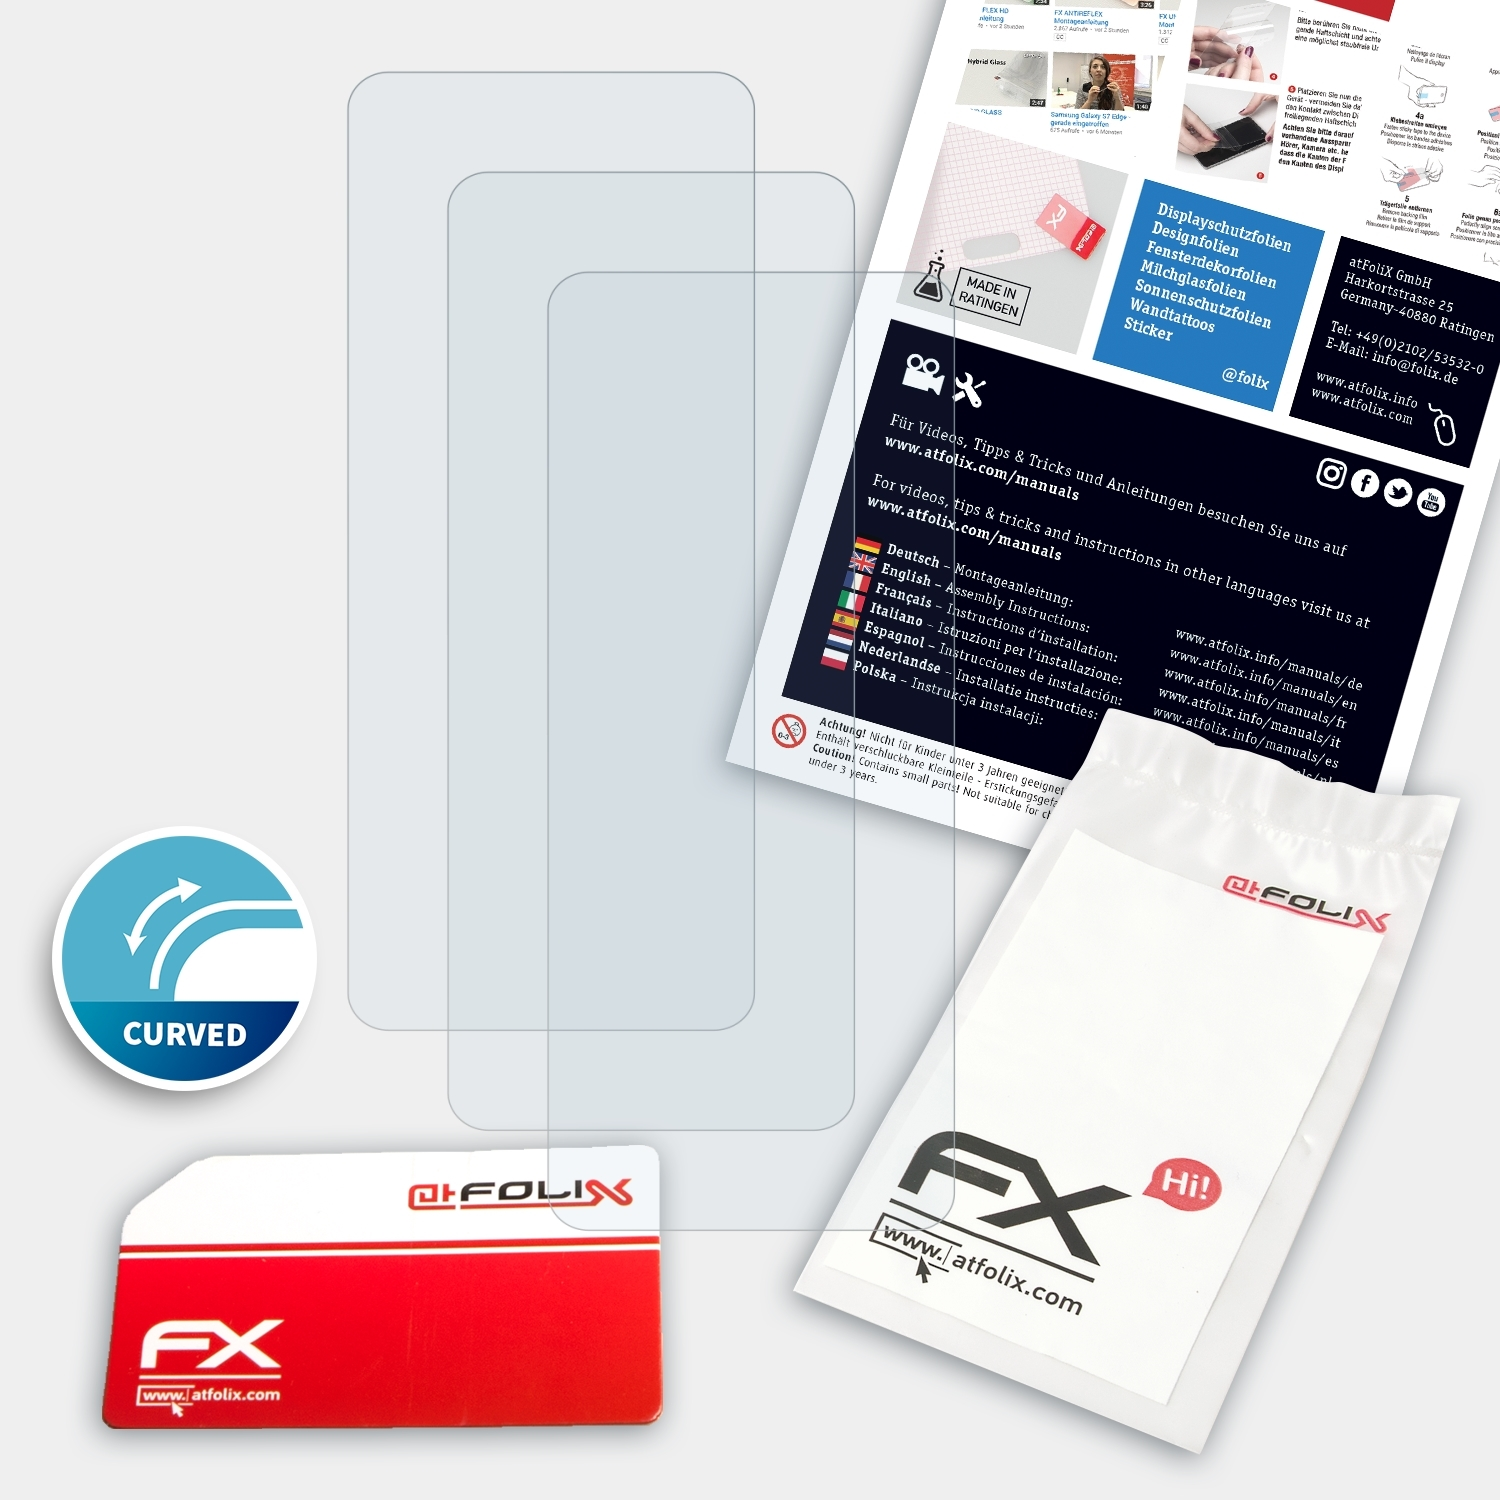 ATFOLIX Garmin 3x FX-ActiFleX 2) Vivofit Displayschutz(für